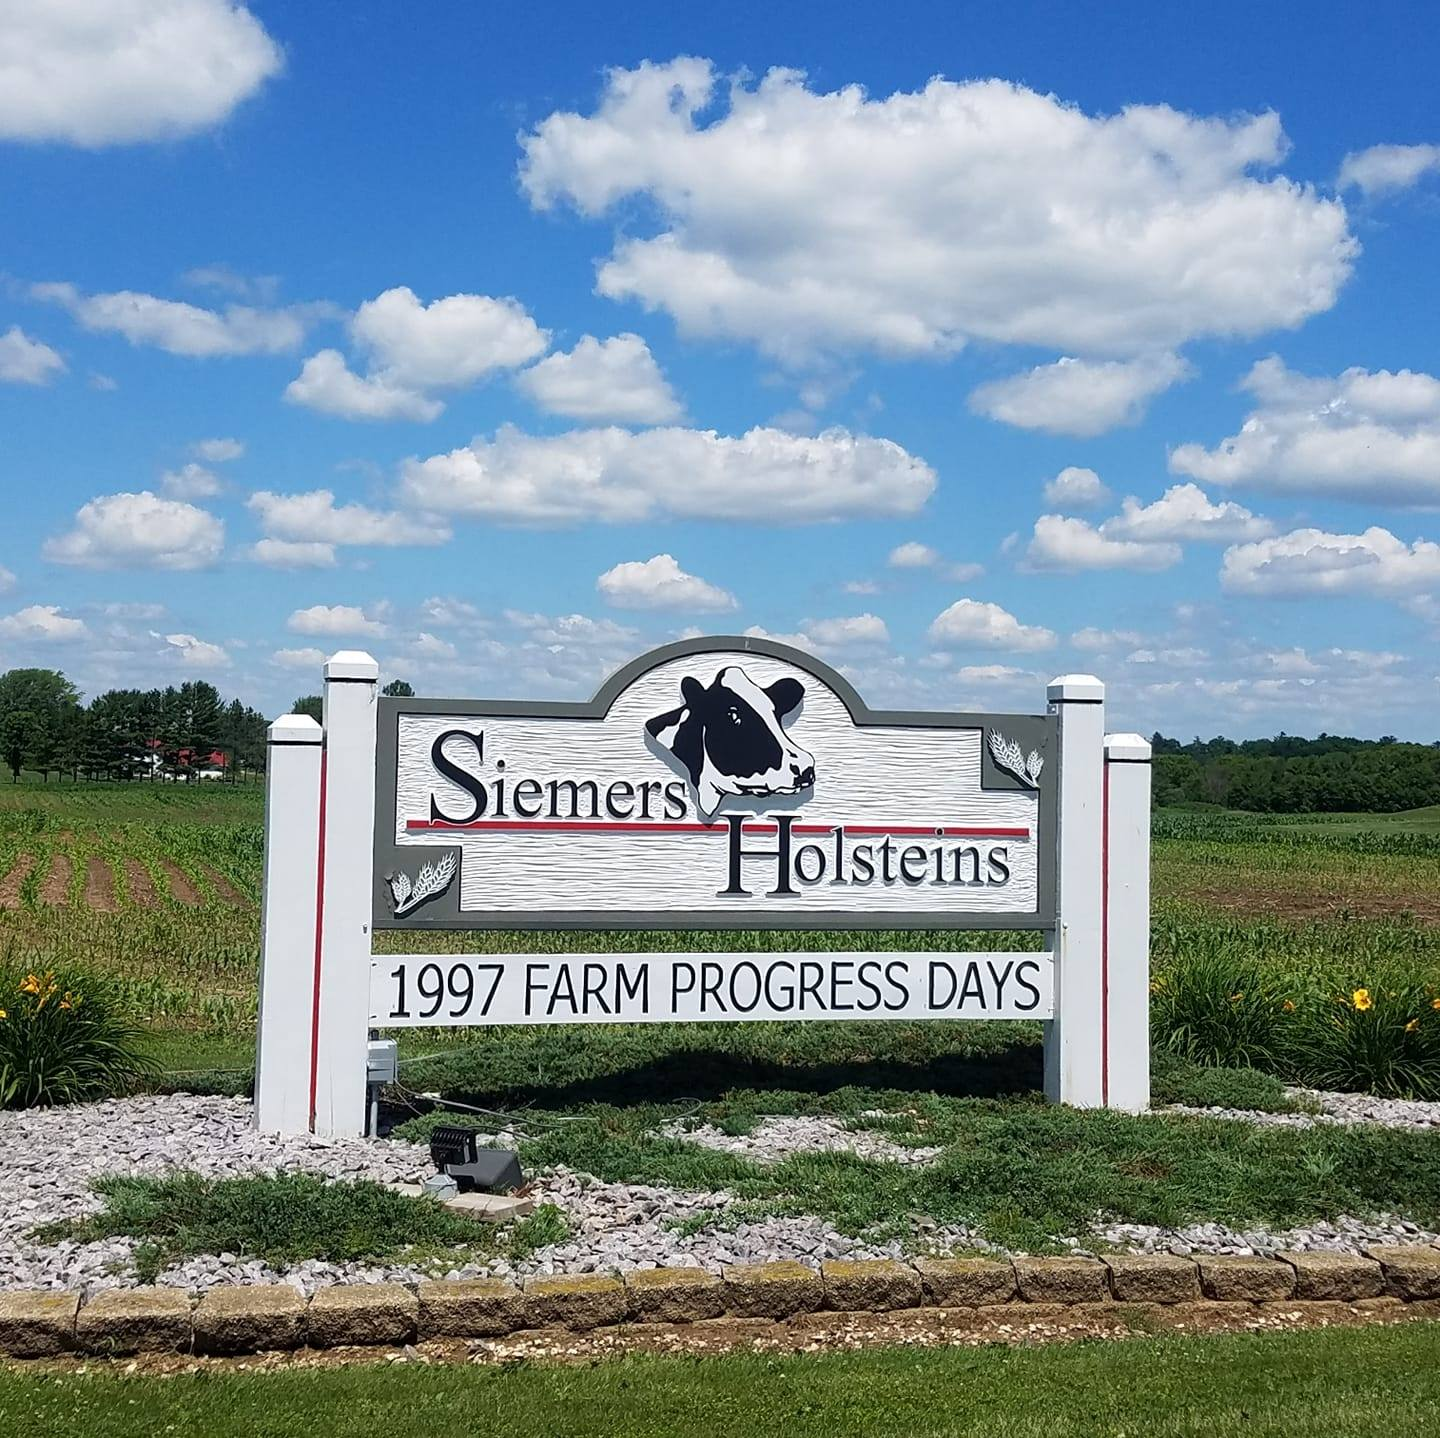 Siemers Holstein Farms shares genetic secrets